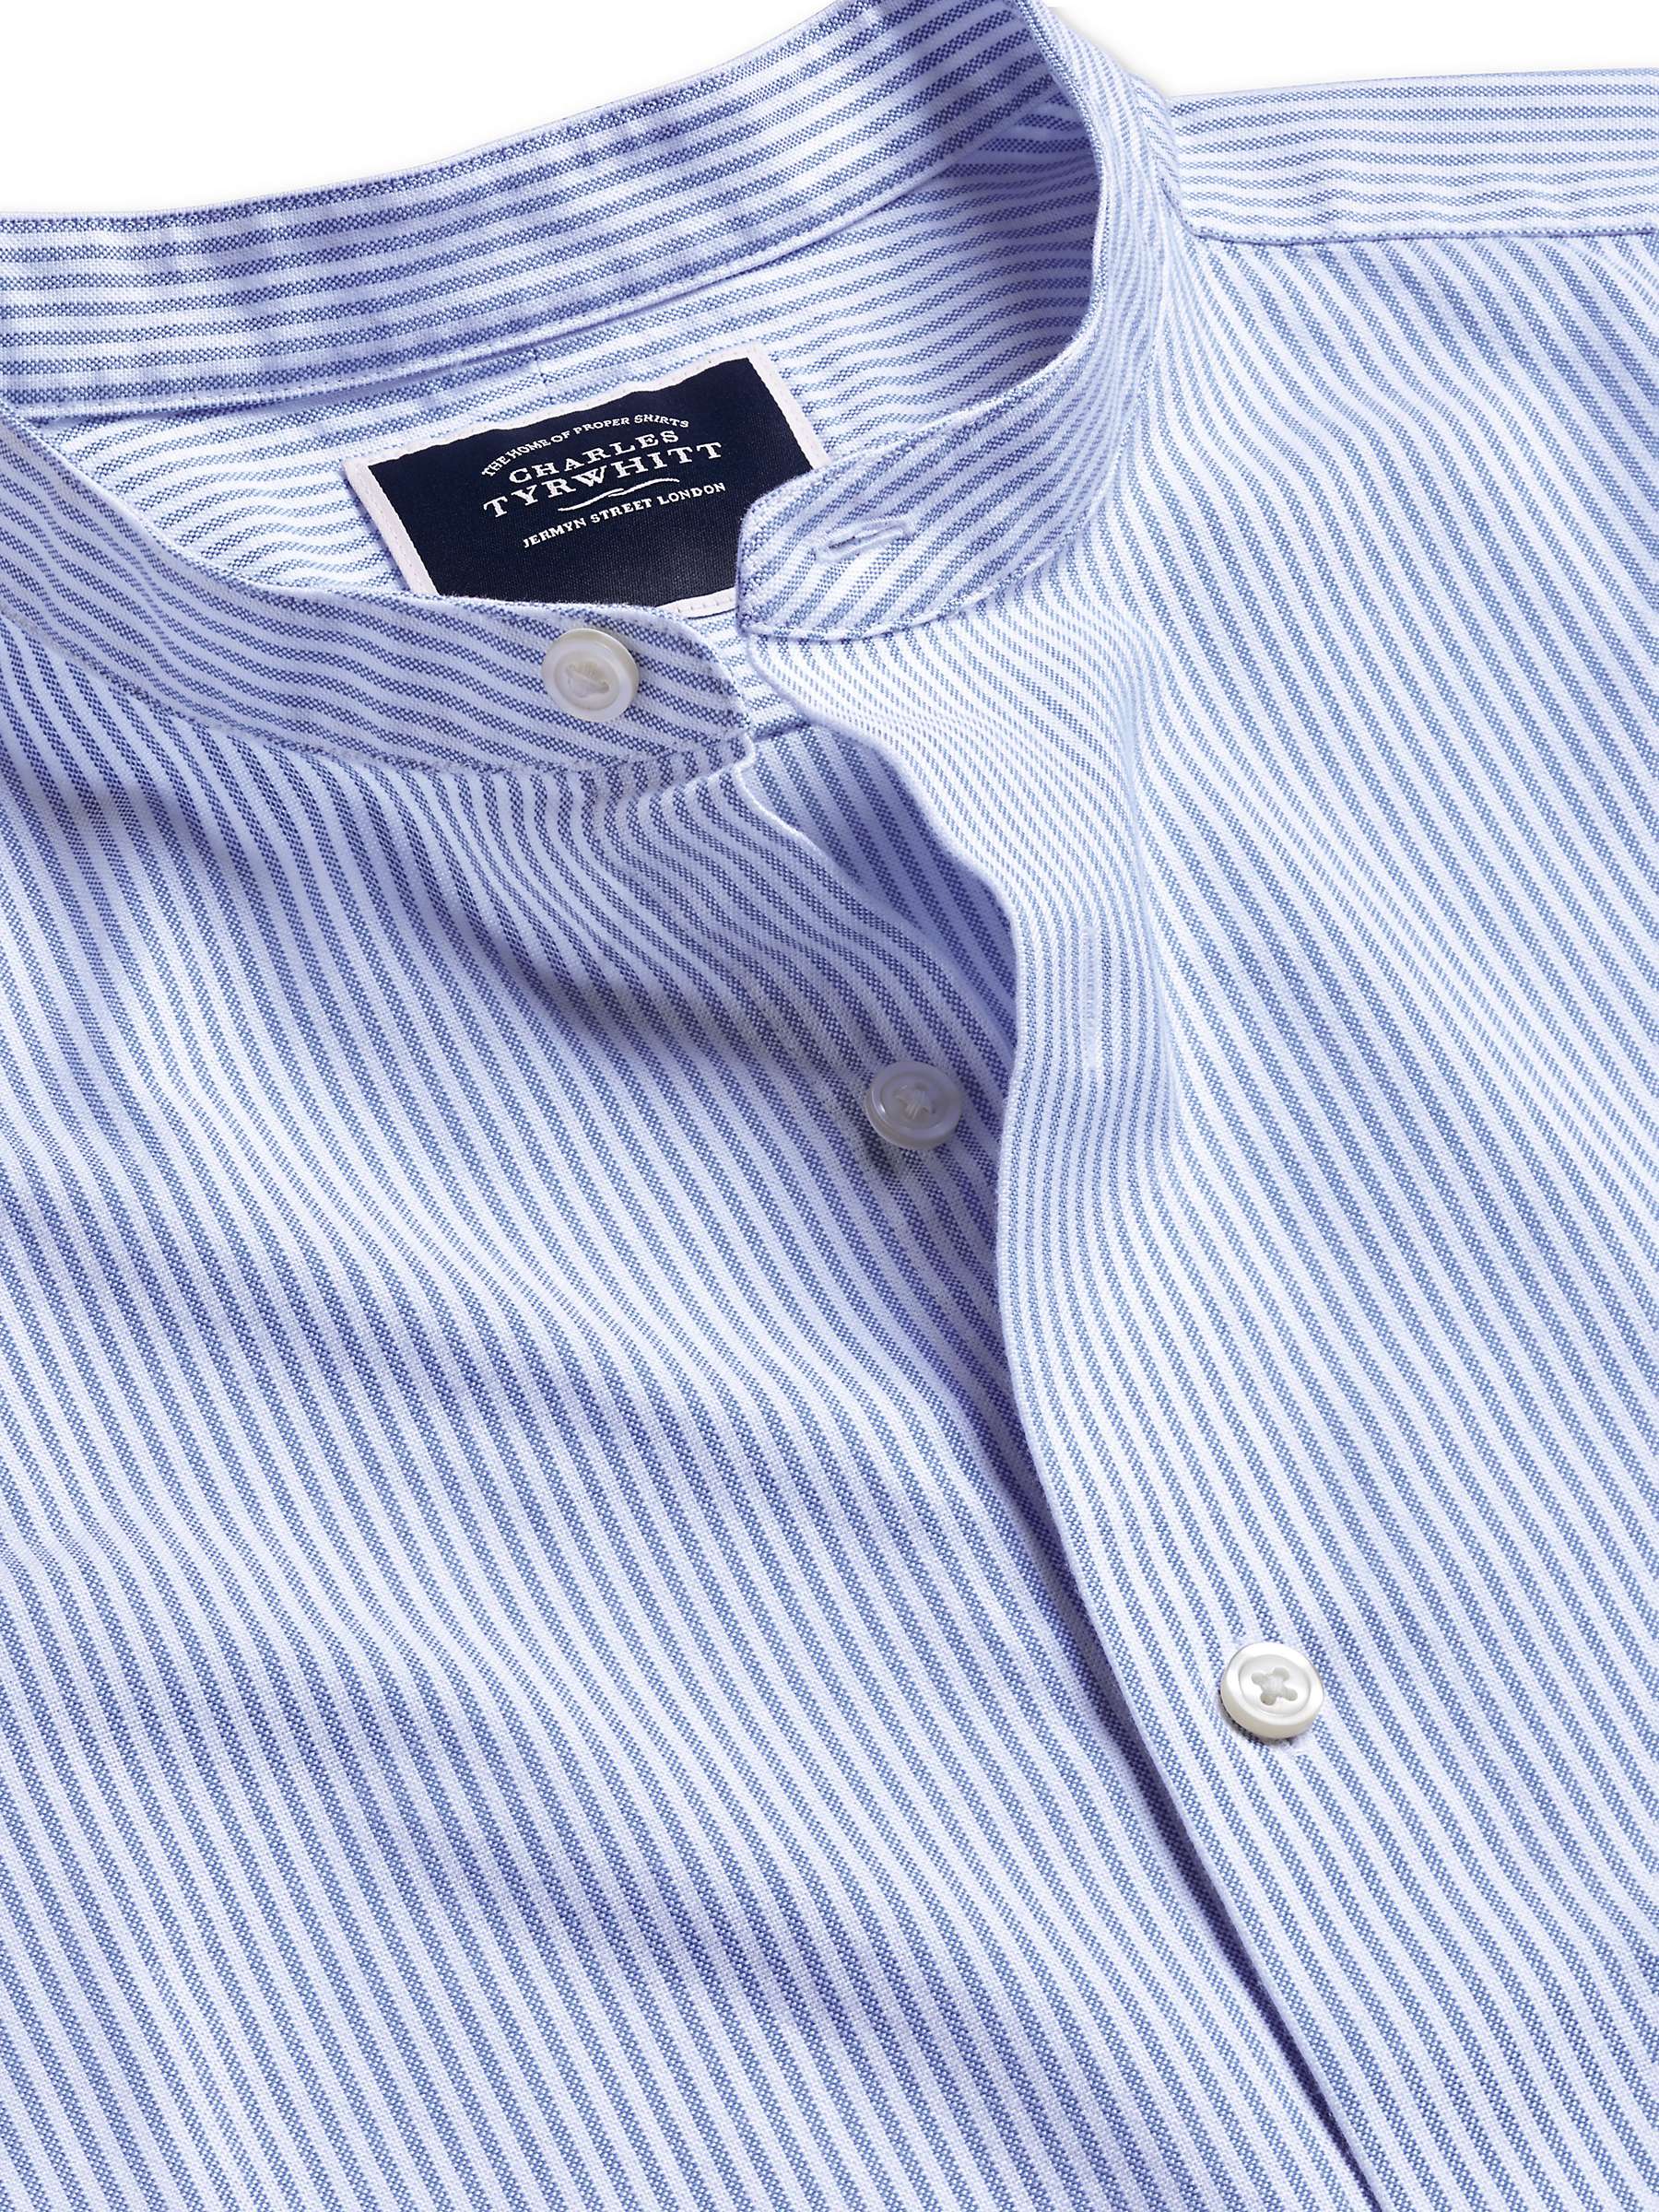 Buy Charles Tyrwhitt Striped Slim Fit Collarless Oxford Shirt, Ocean Blue/White Online at johnlewis.com